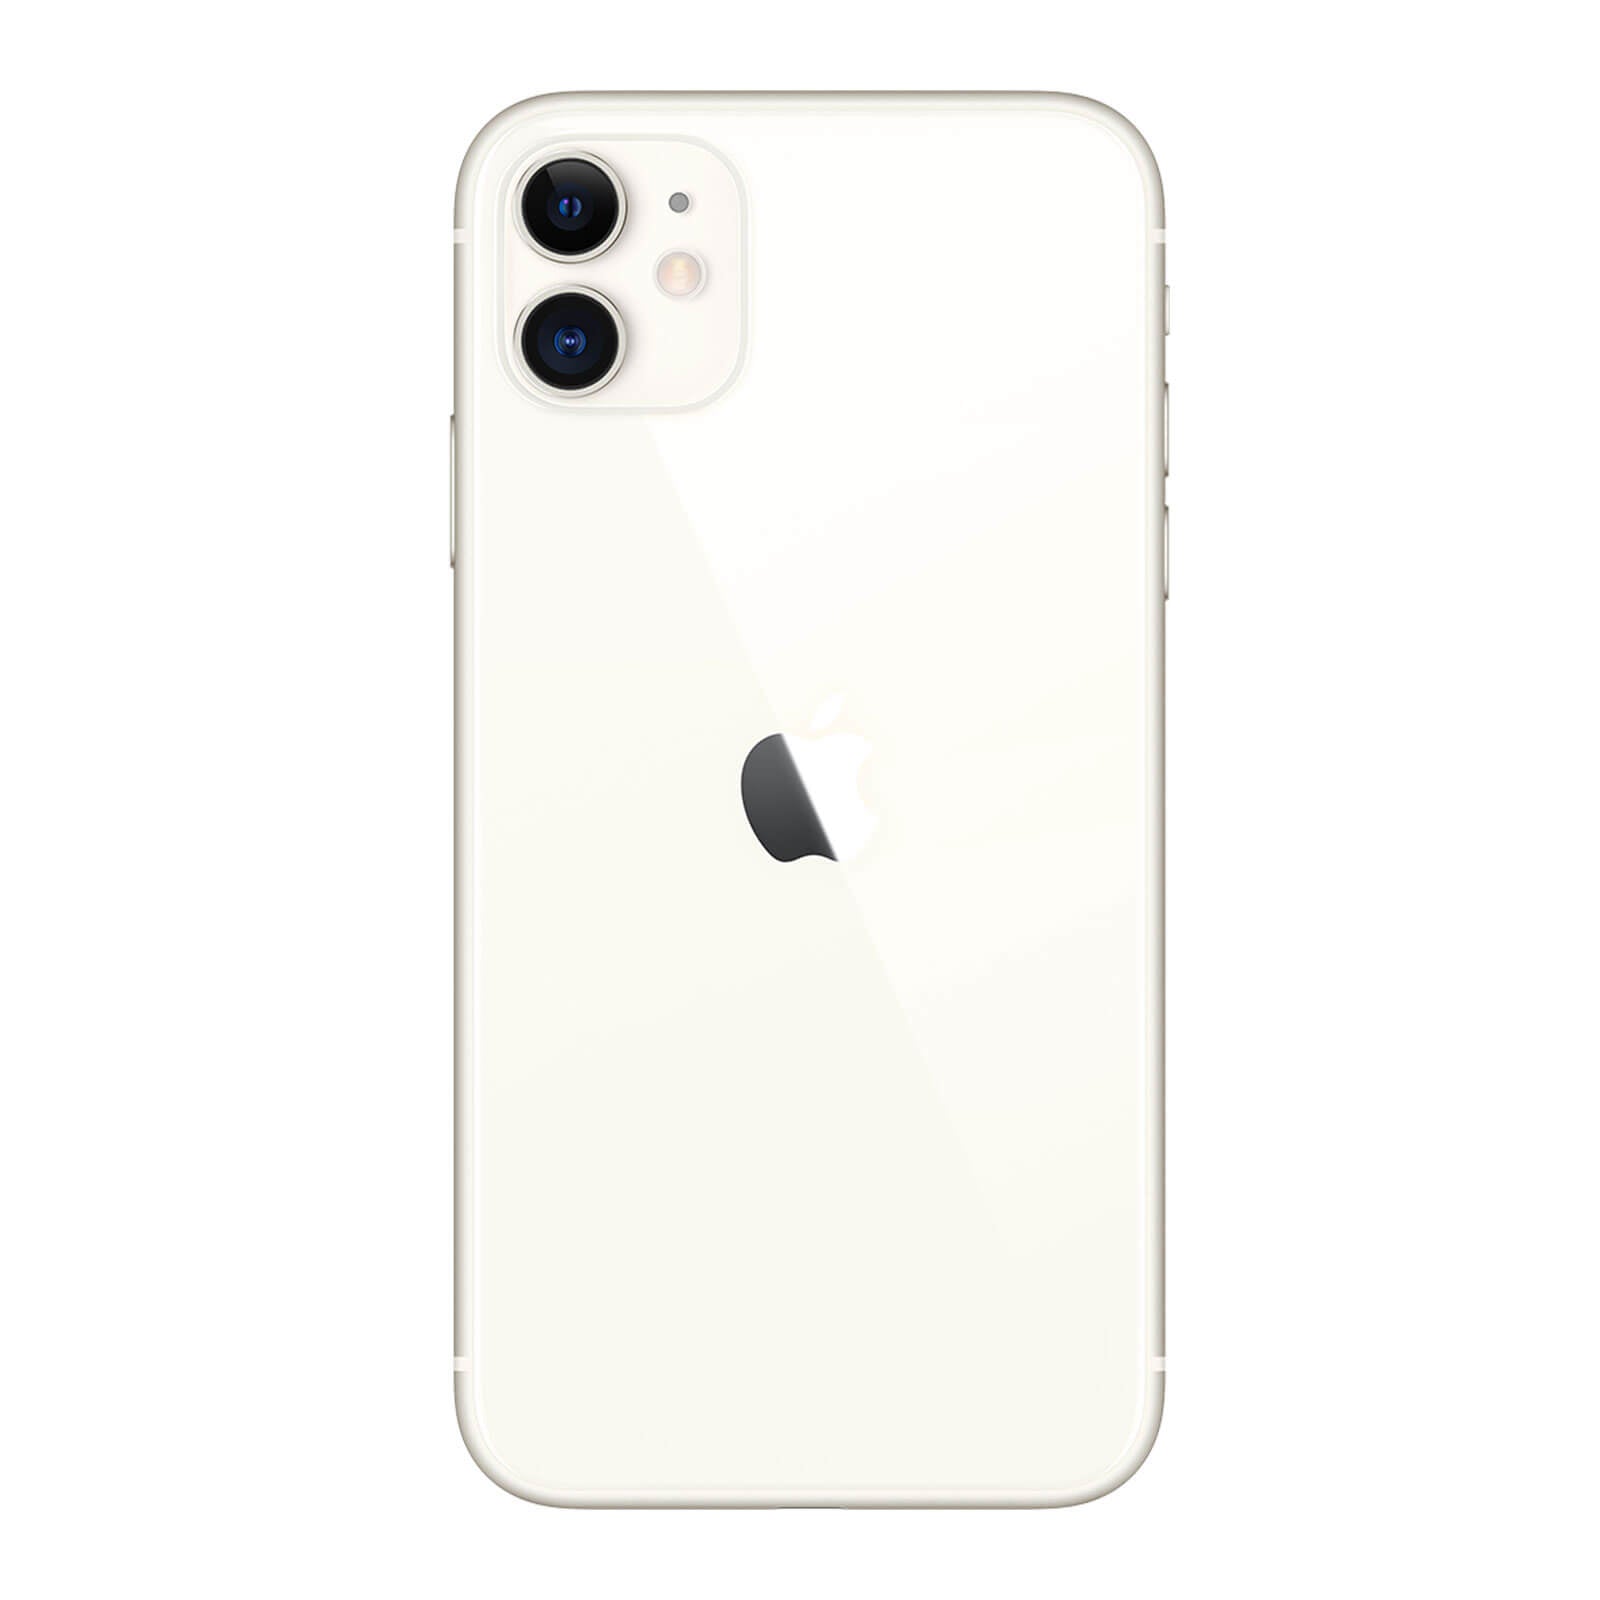 Apple iPhone 11 128GB White Pristine - AT&T